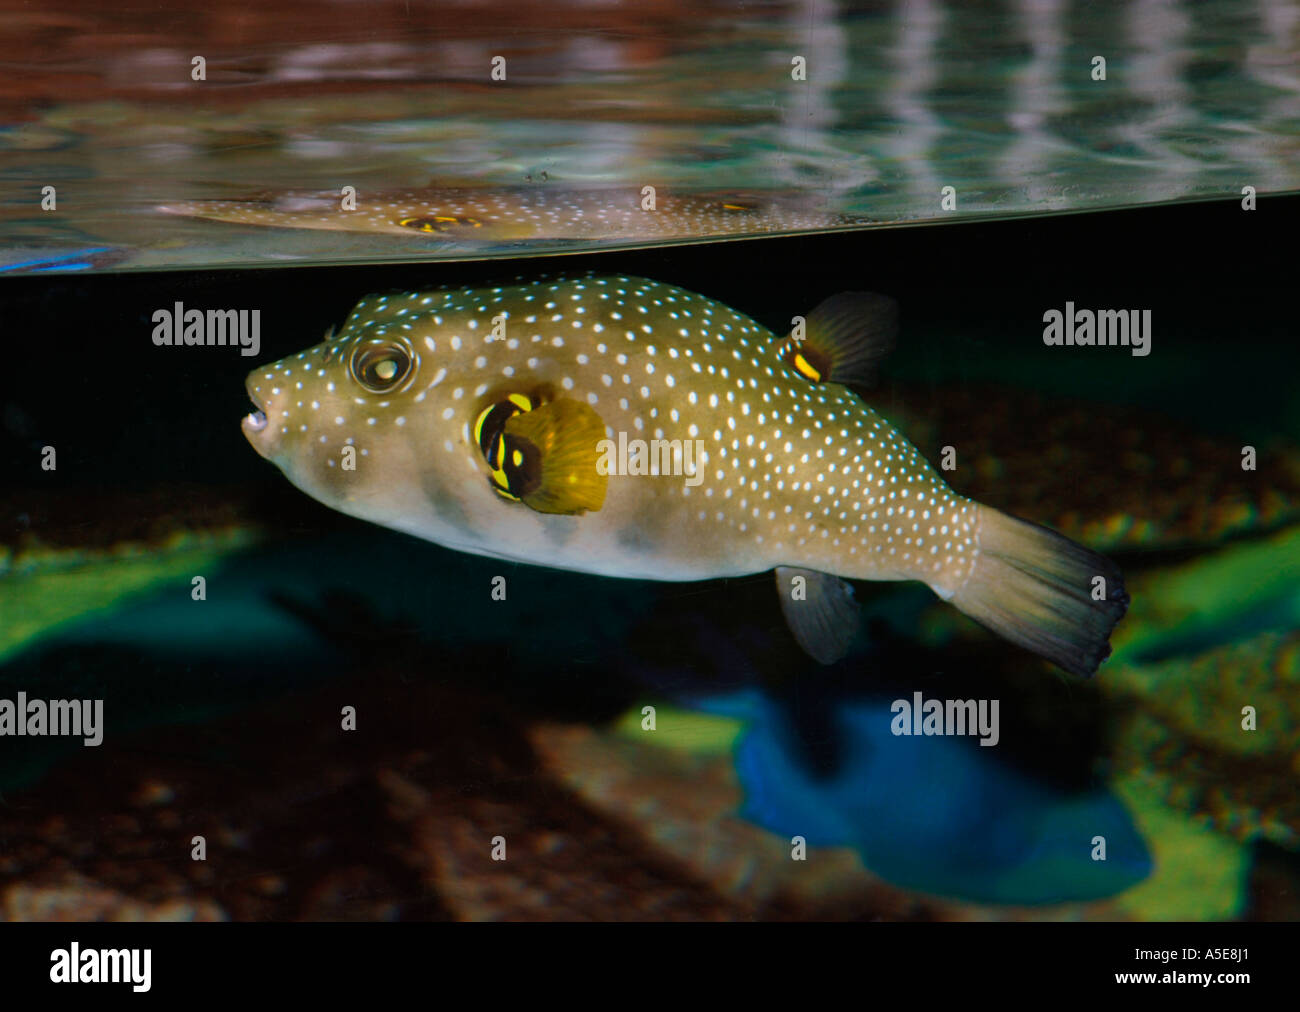 Spotted Puffer Fish (Tetraodon nigrifilis) Stock Photo